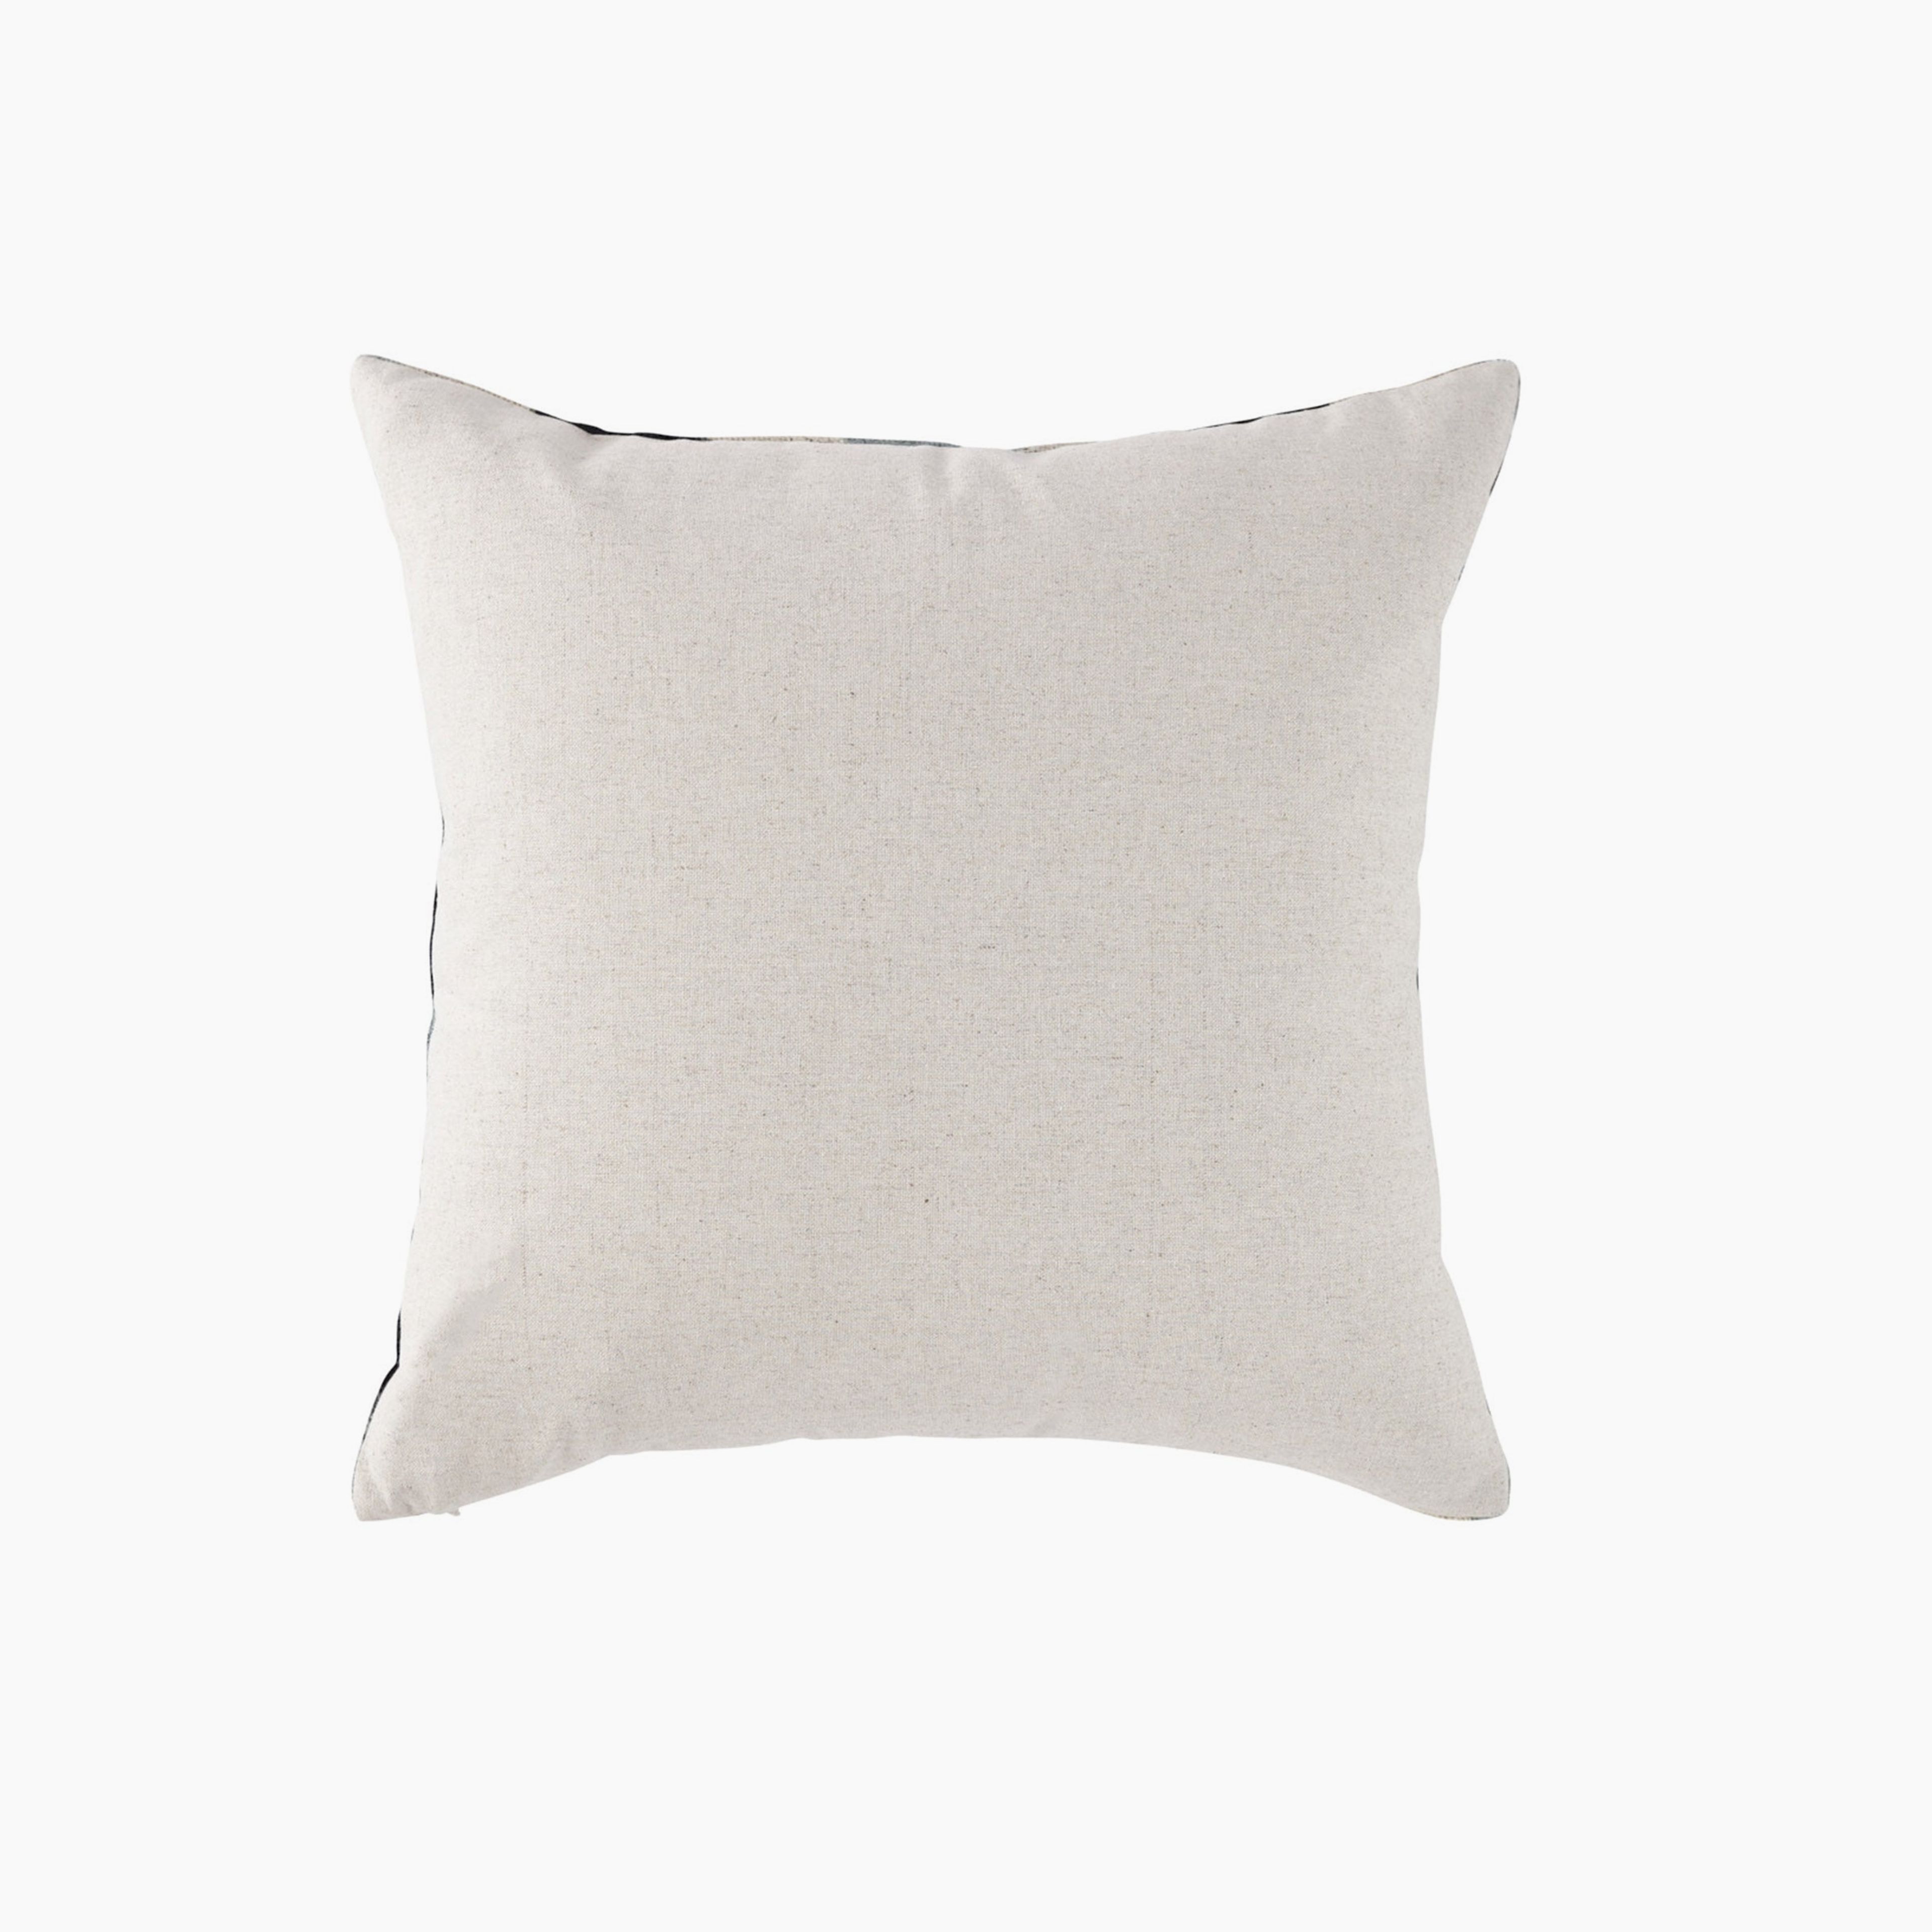 Izzo Silk Ikat Pillow